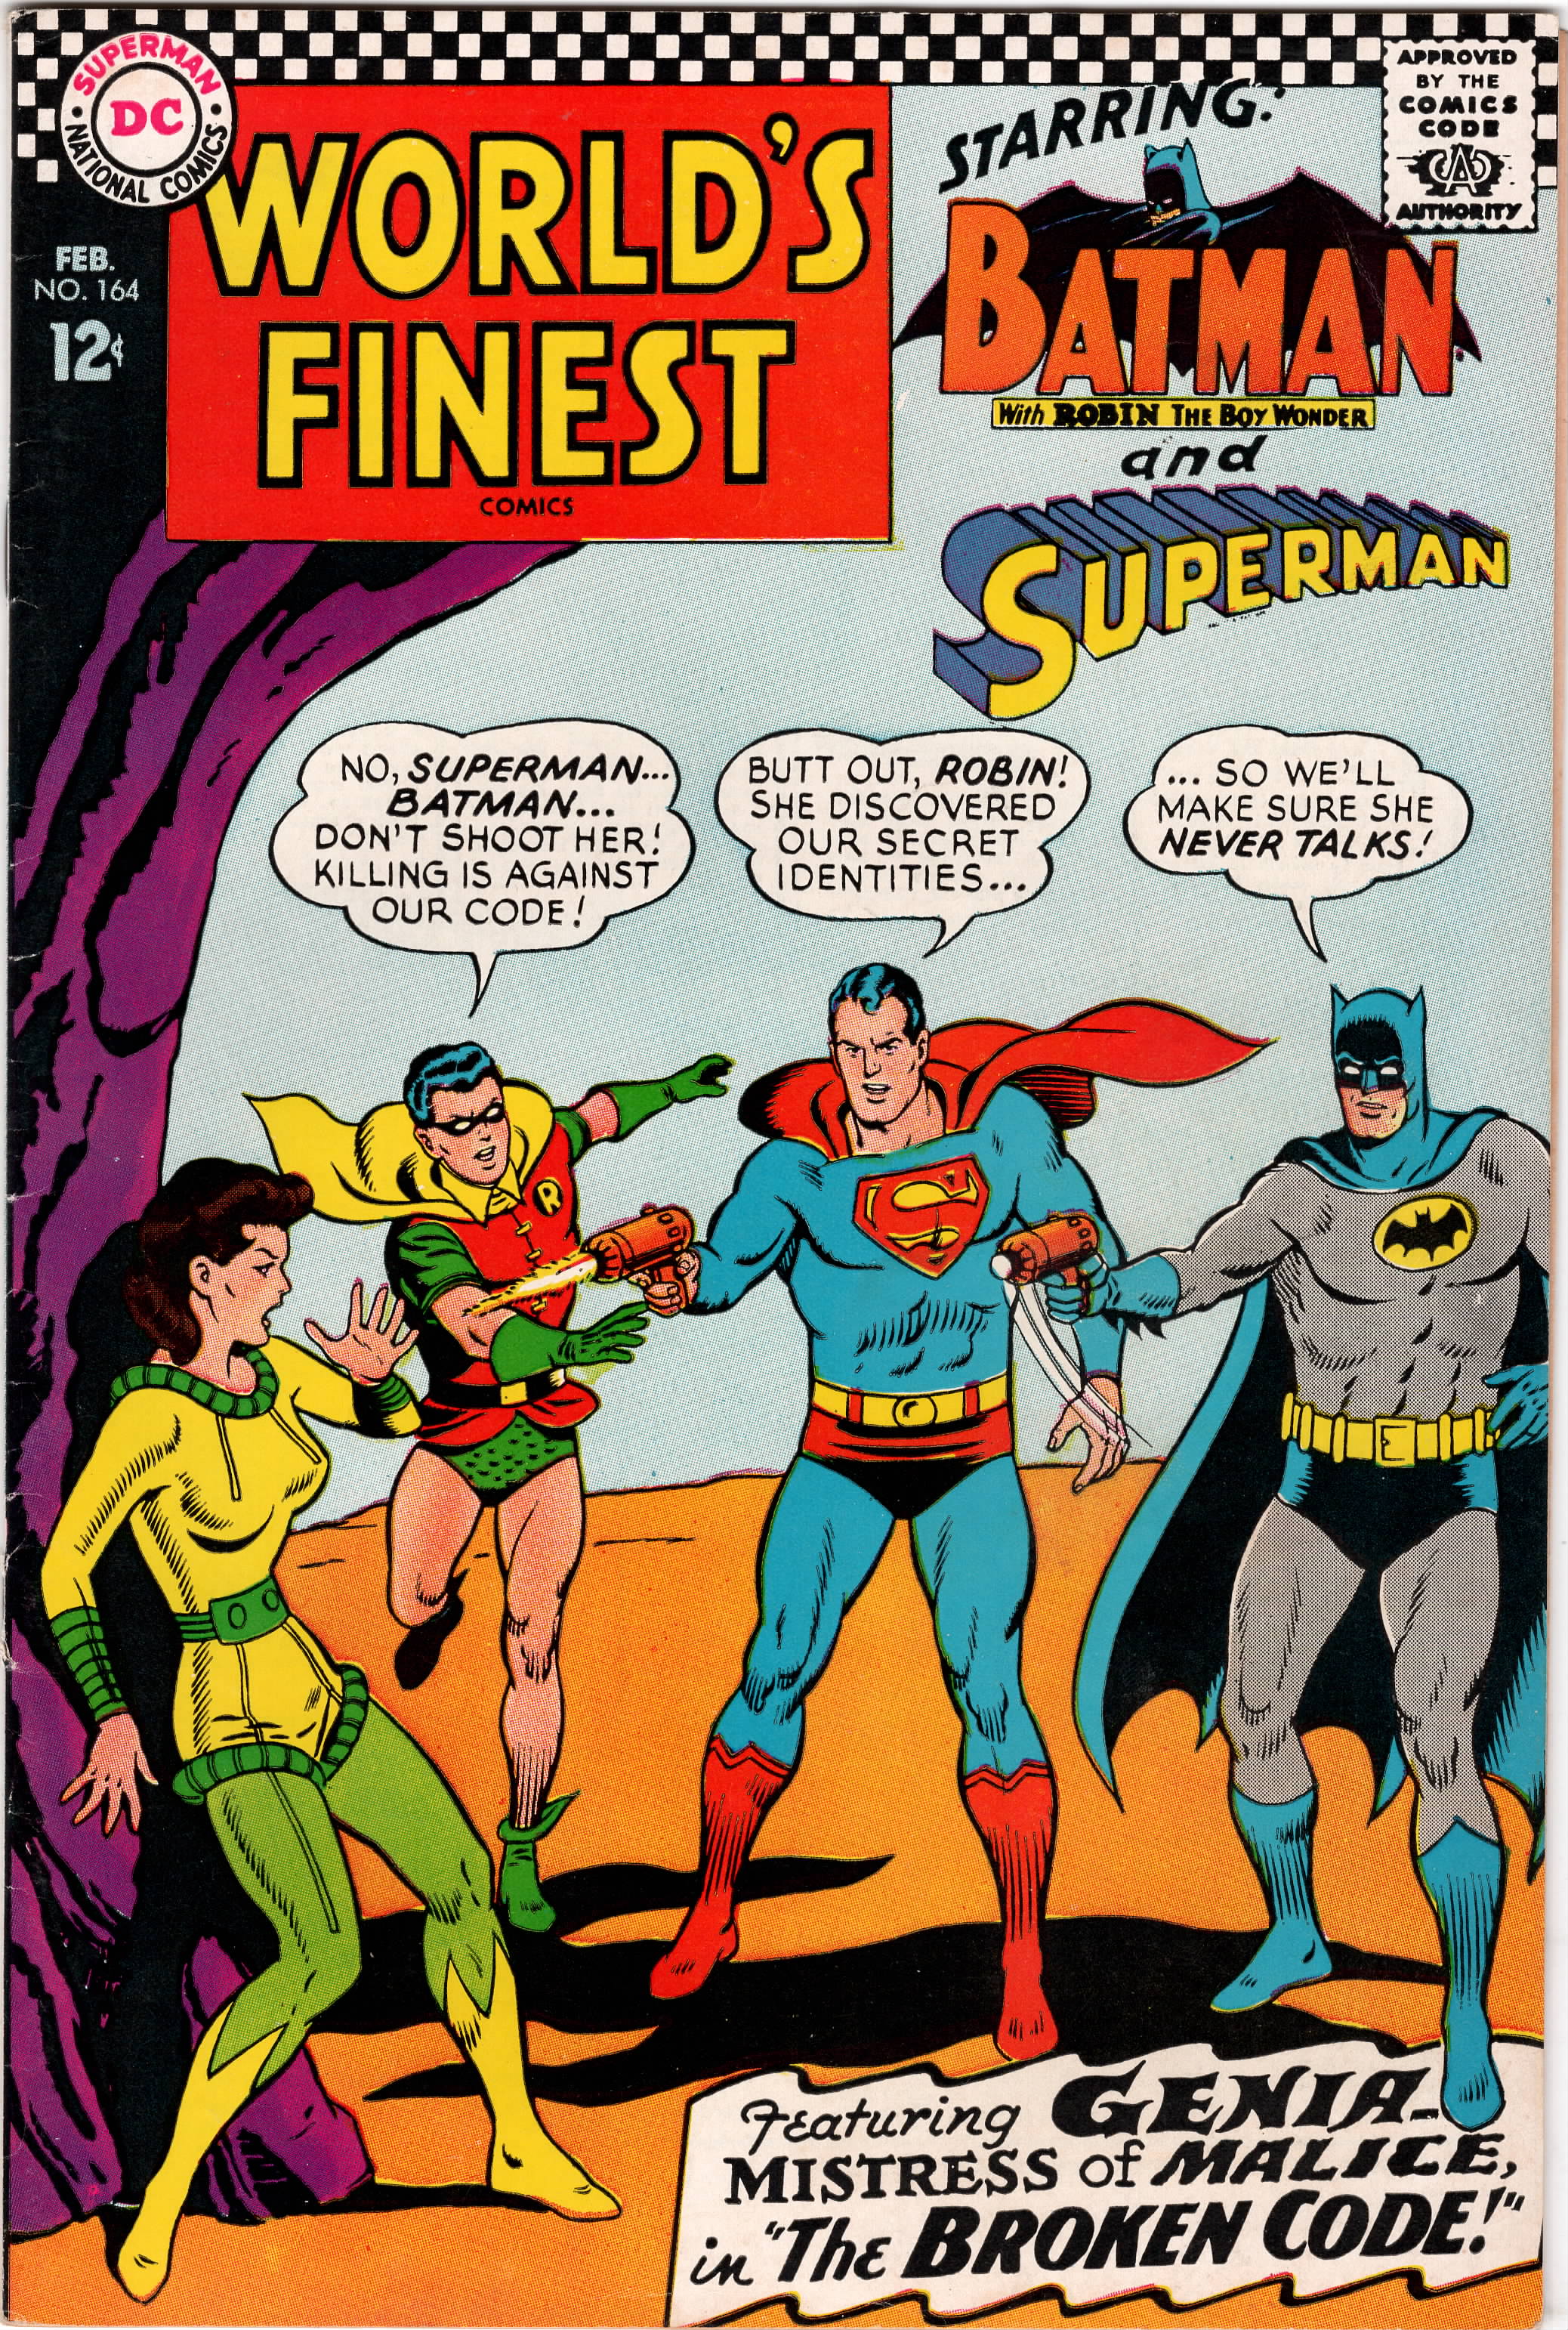 World's Finest Comics #164